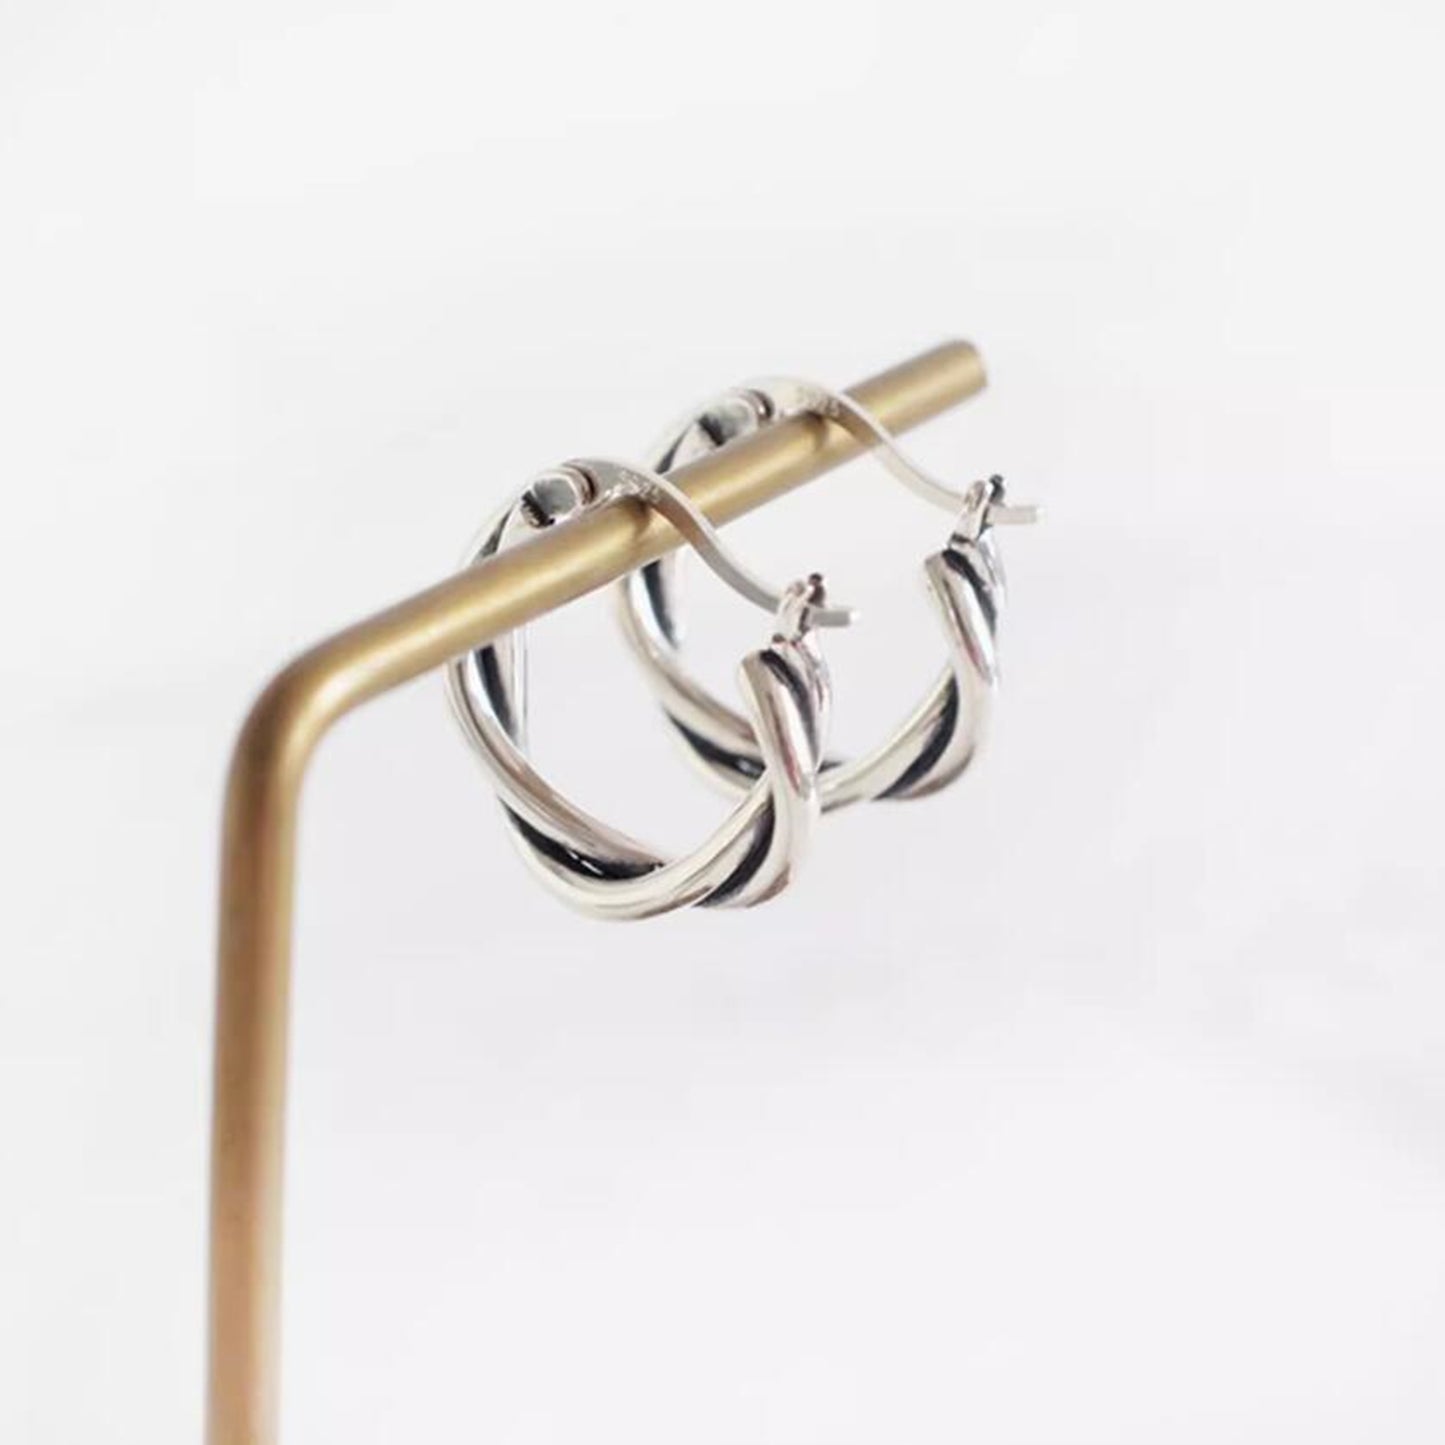 19mm Sterling Silver Oxidized Twist Hoop Earrings with Knot Detail